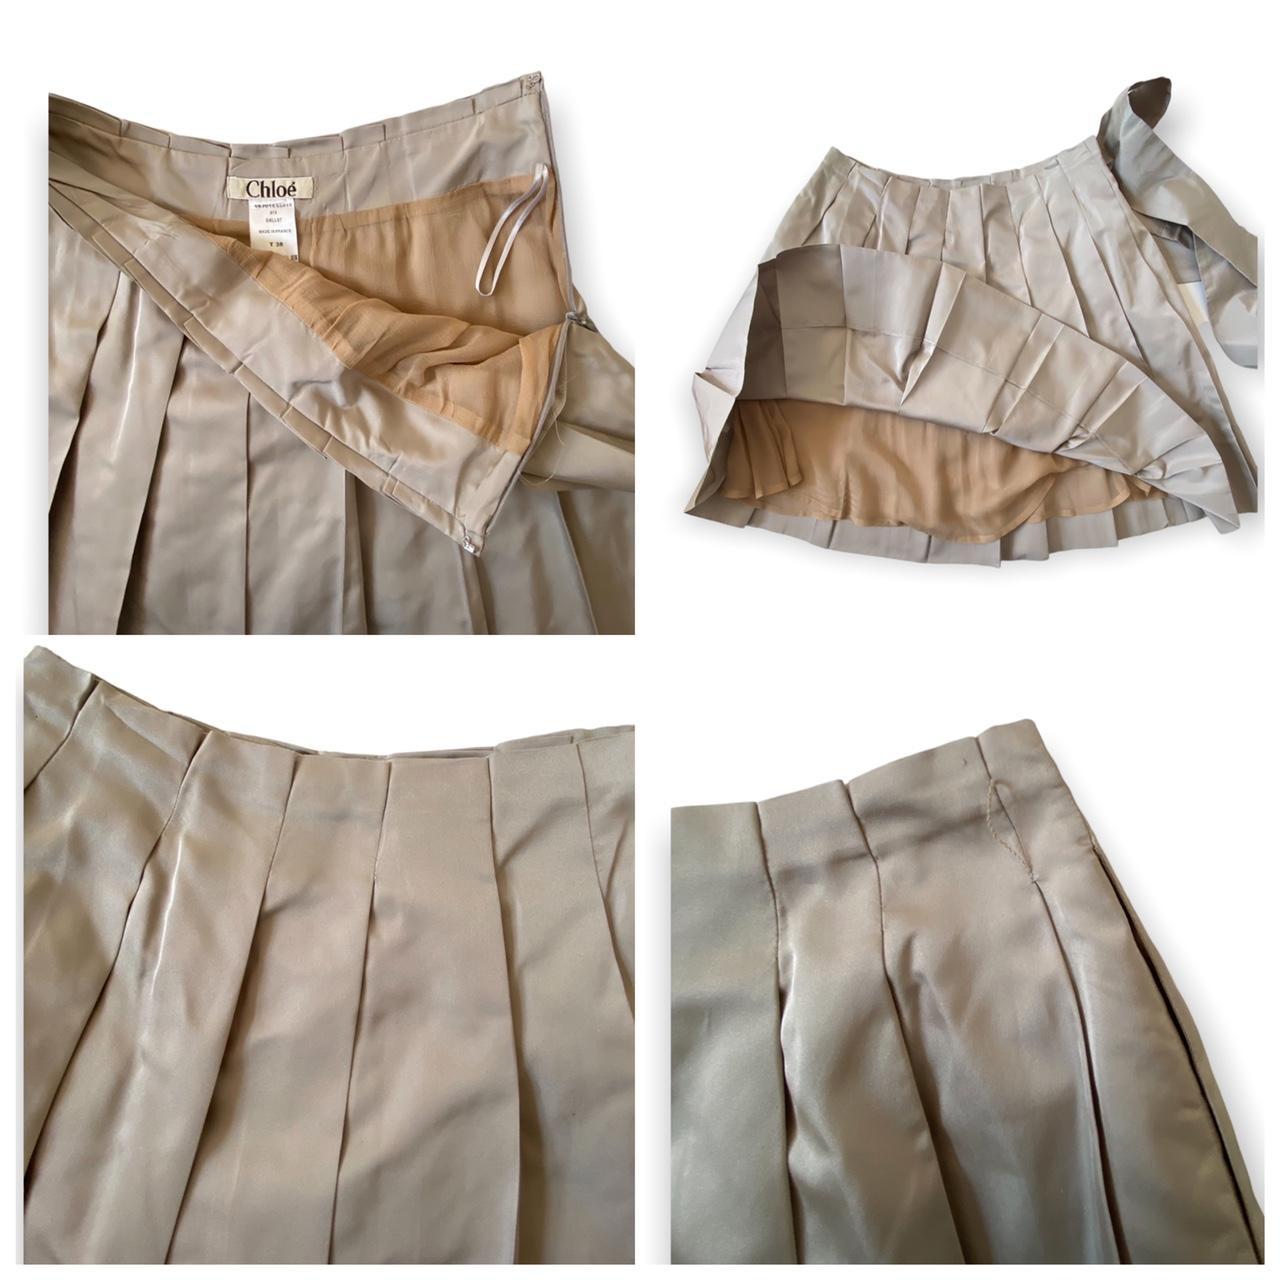 Product Image 3 - Chloé Silk Mini Skirt, Pleated,
size